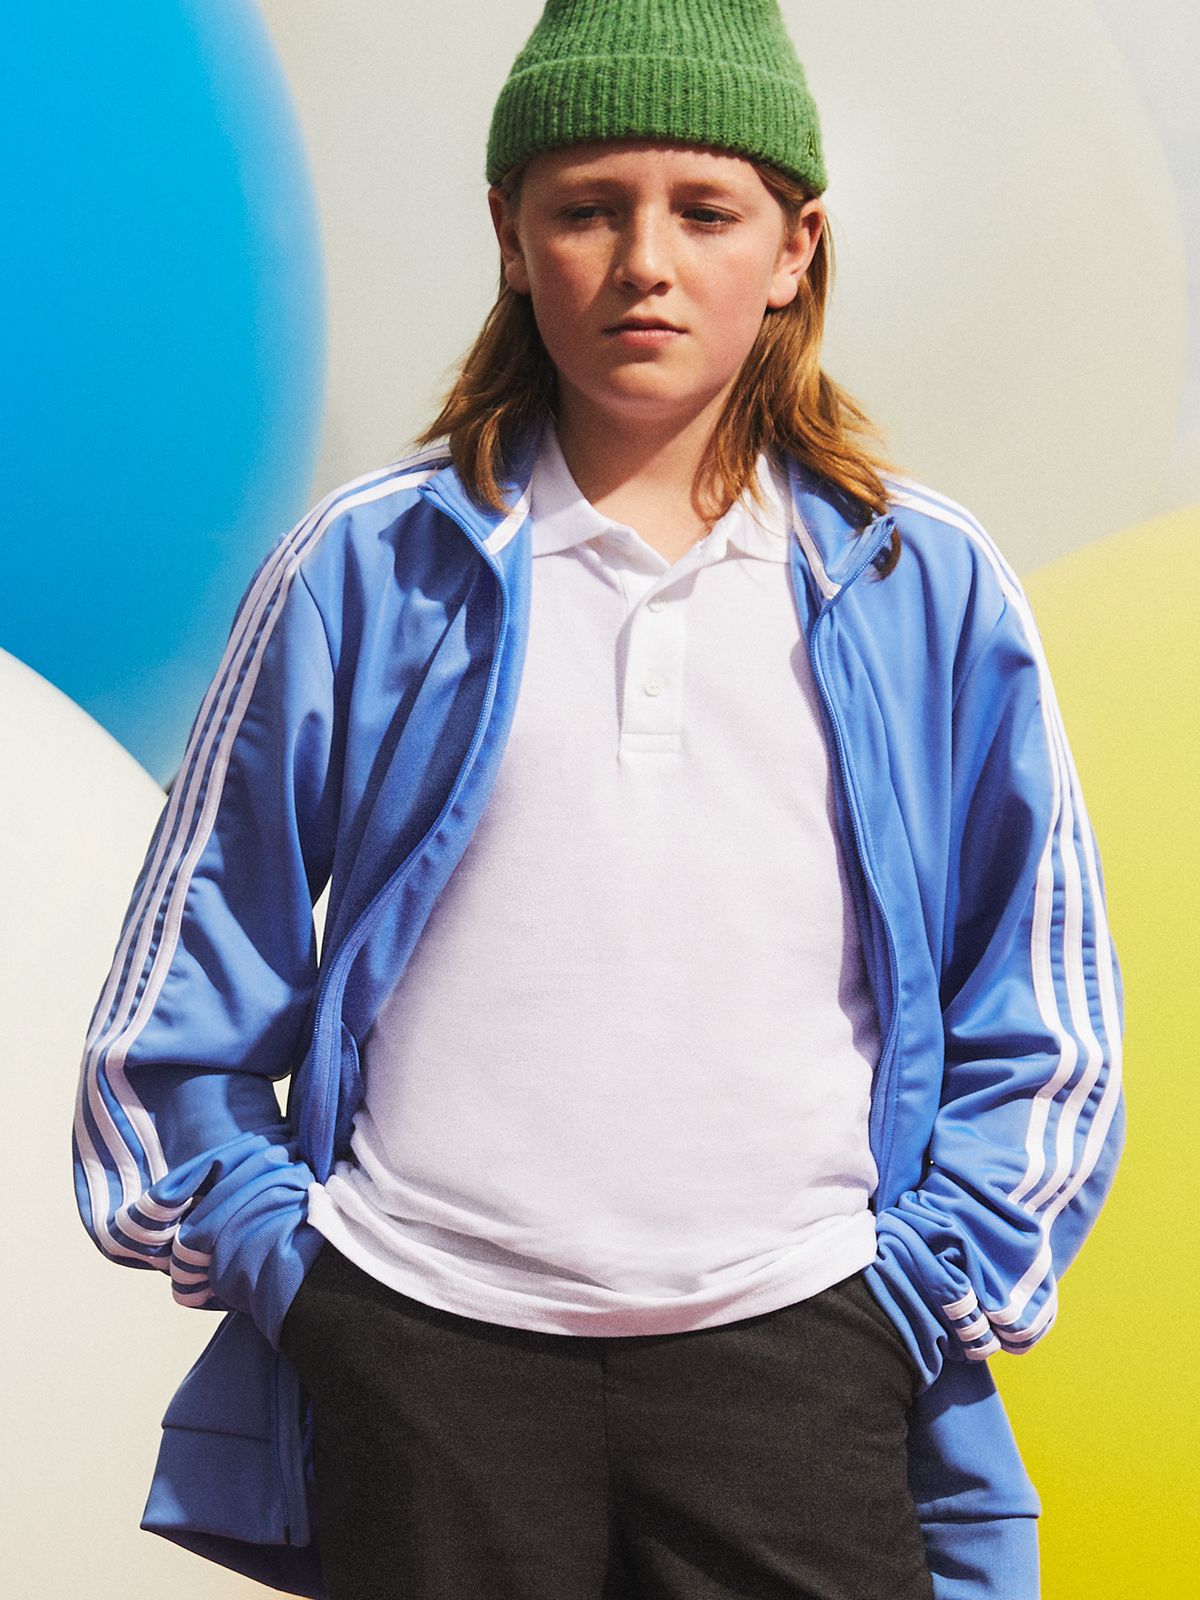 Image of a boy wearing a sports jacket